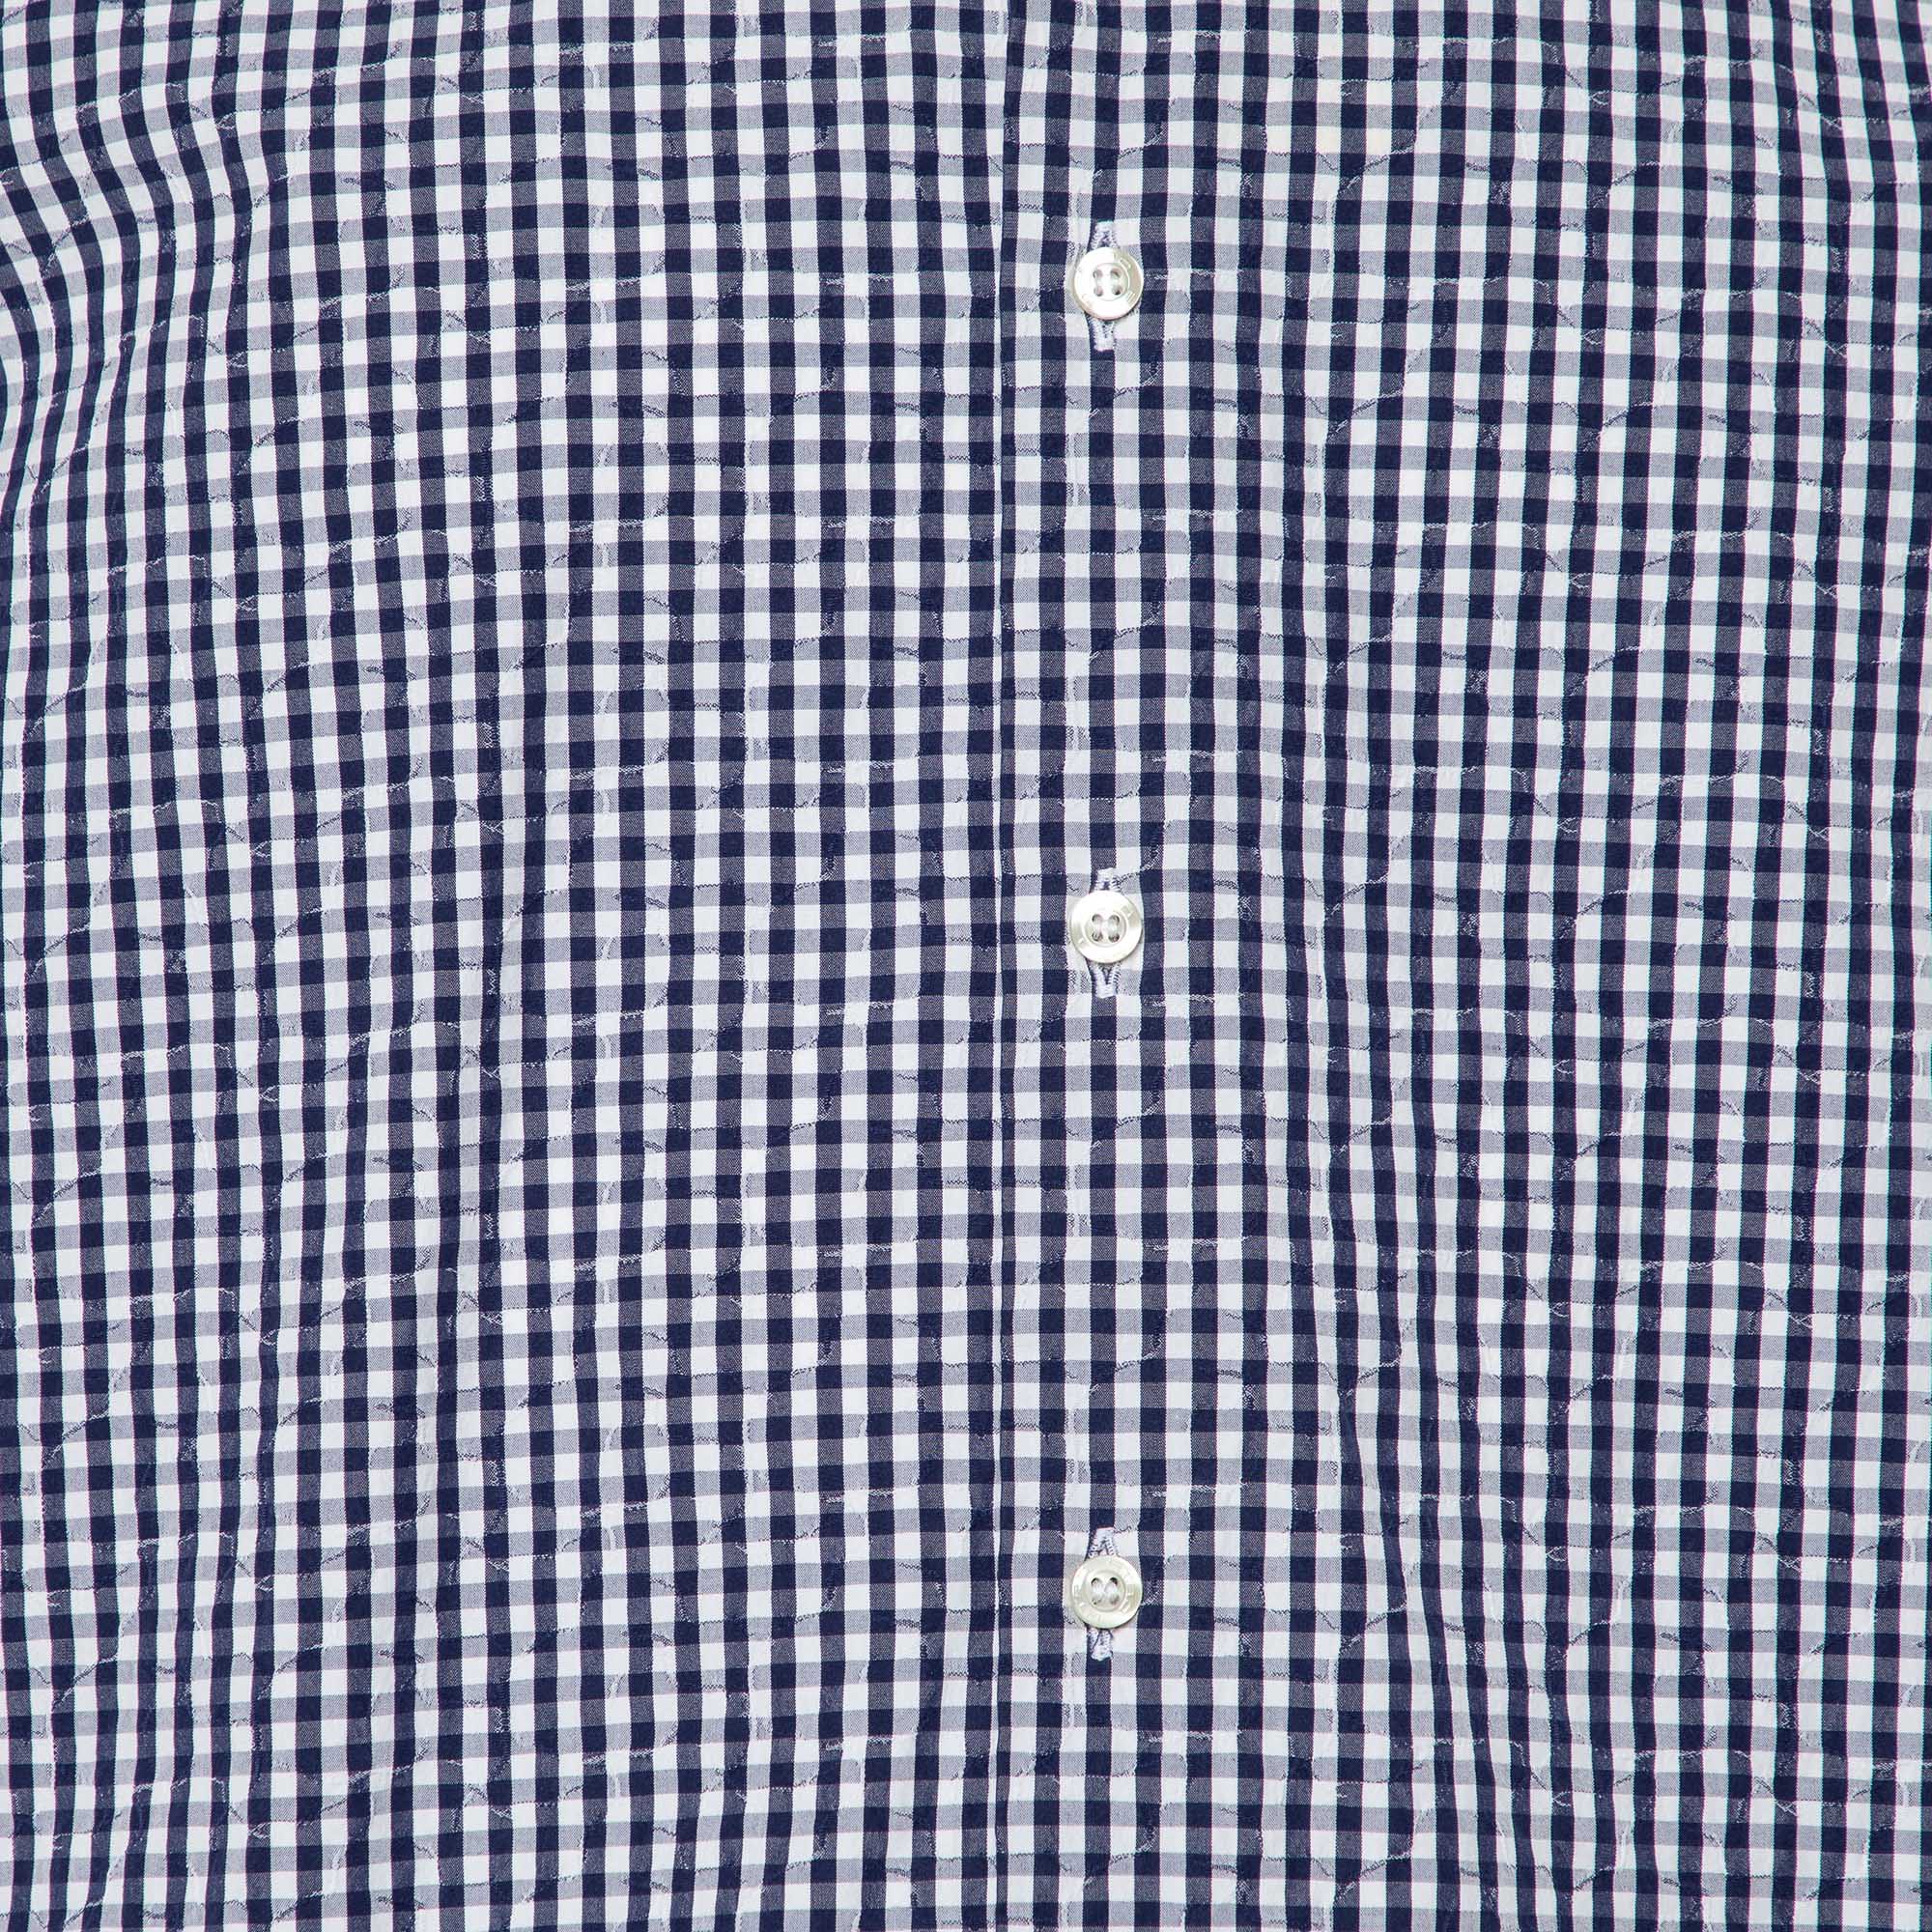 Etro Blue Checked Cotton Classic Shirt S